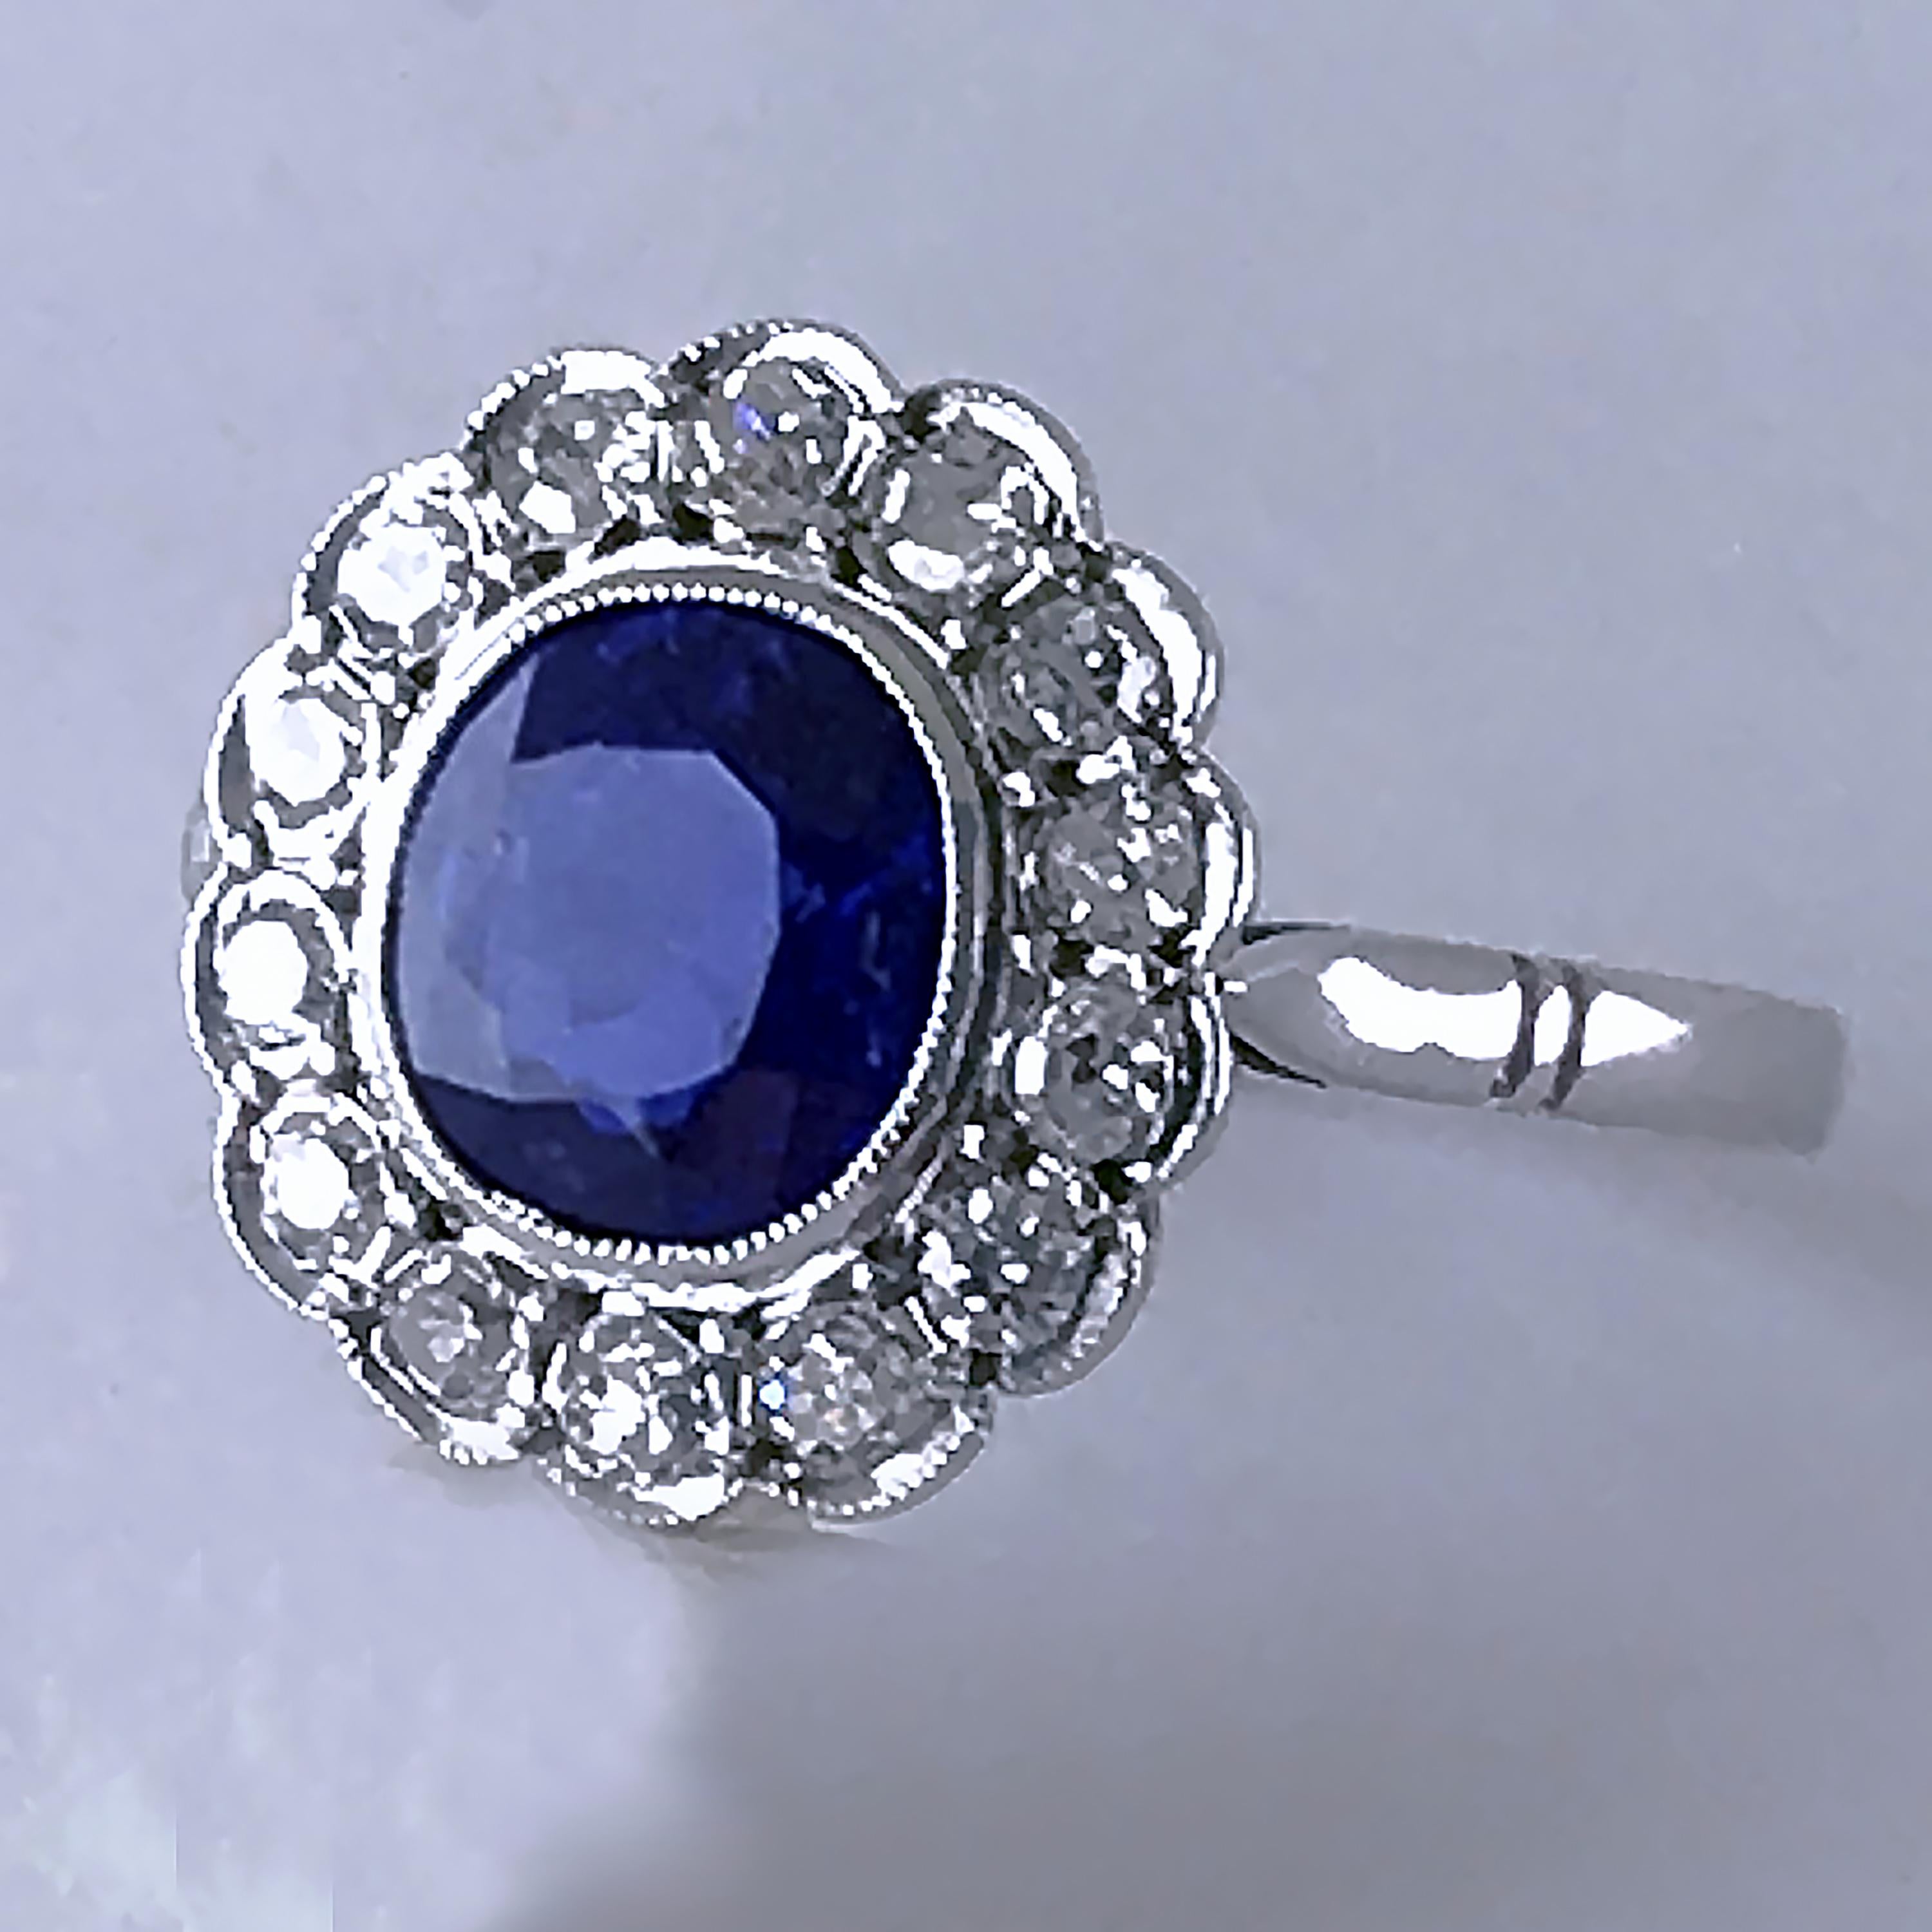 burma sapphire ring